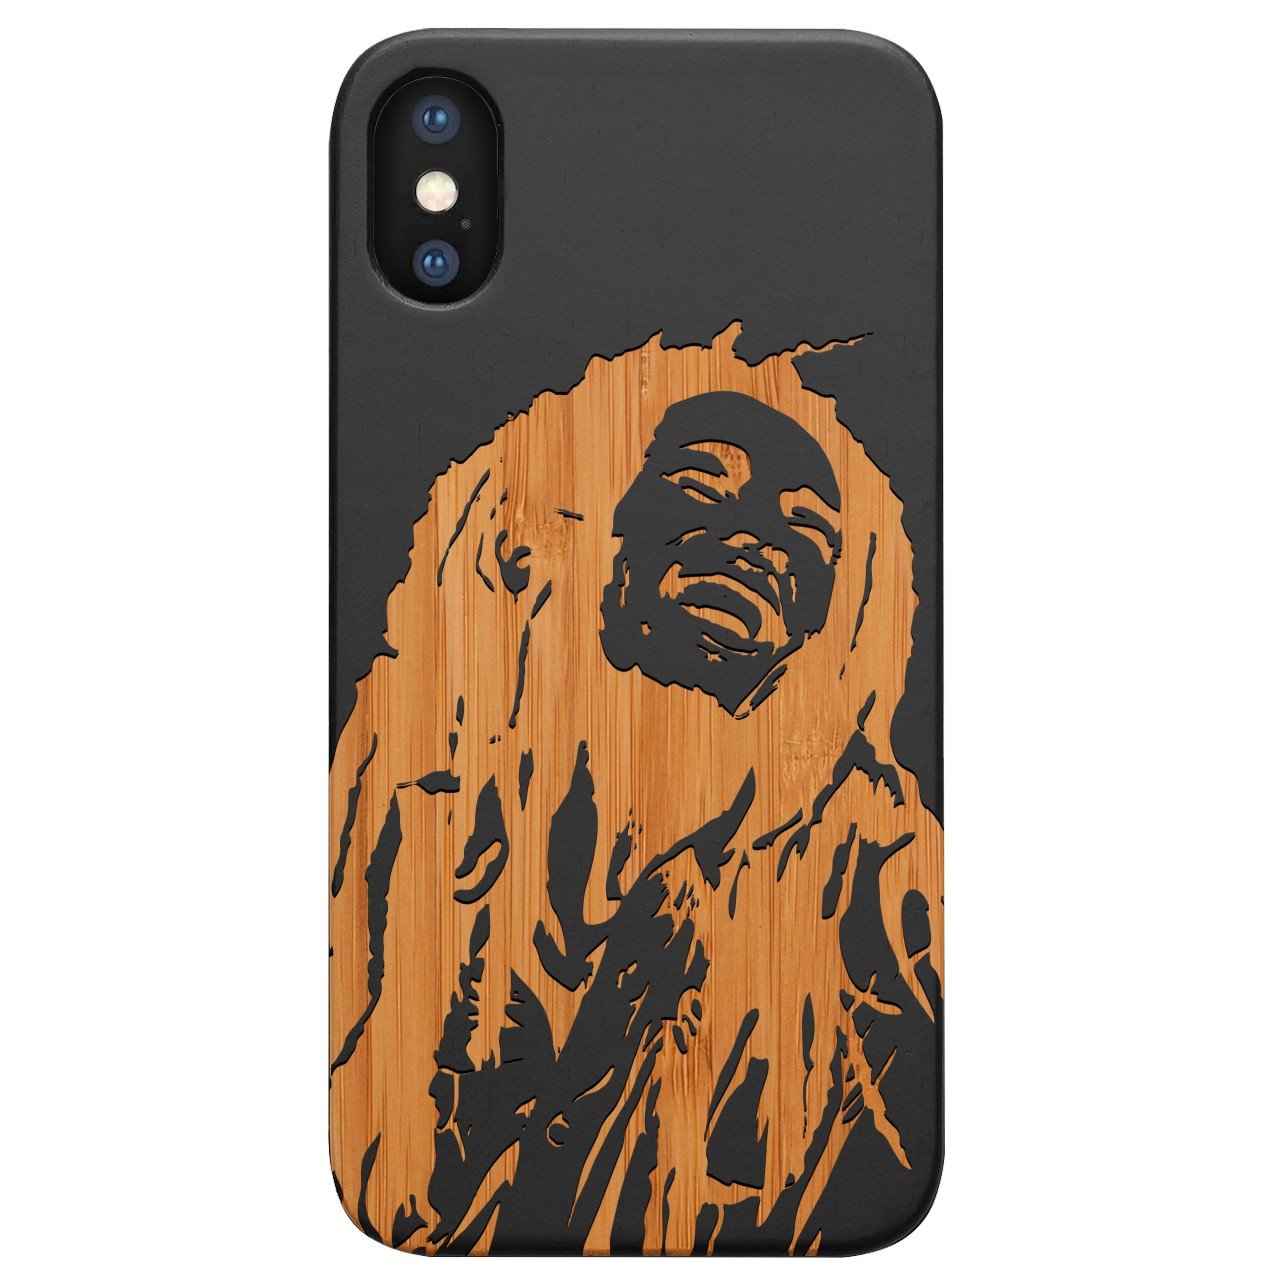 Bob Marley 1 - Engraved - Wooden Phone Case